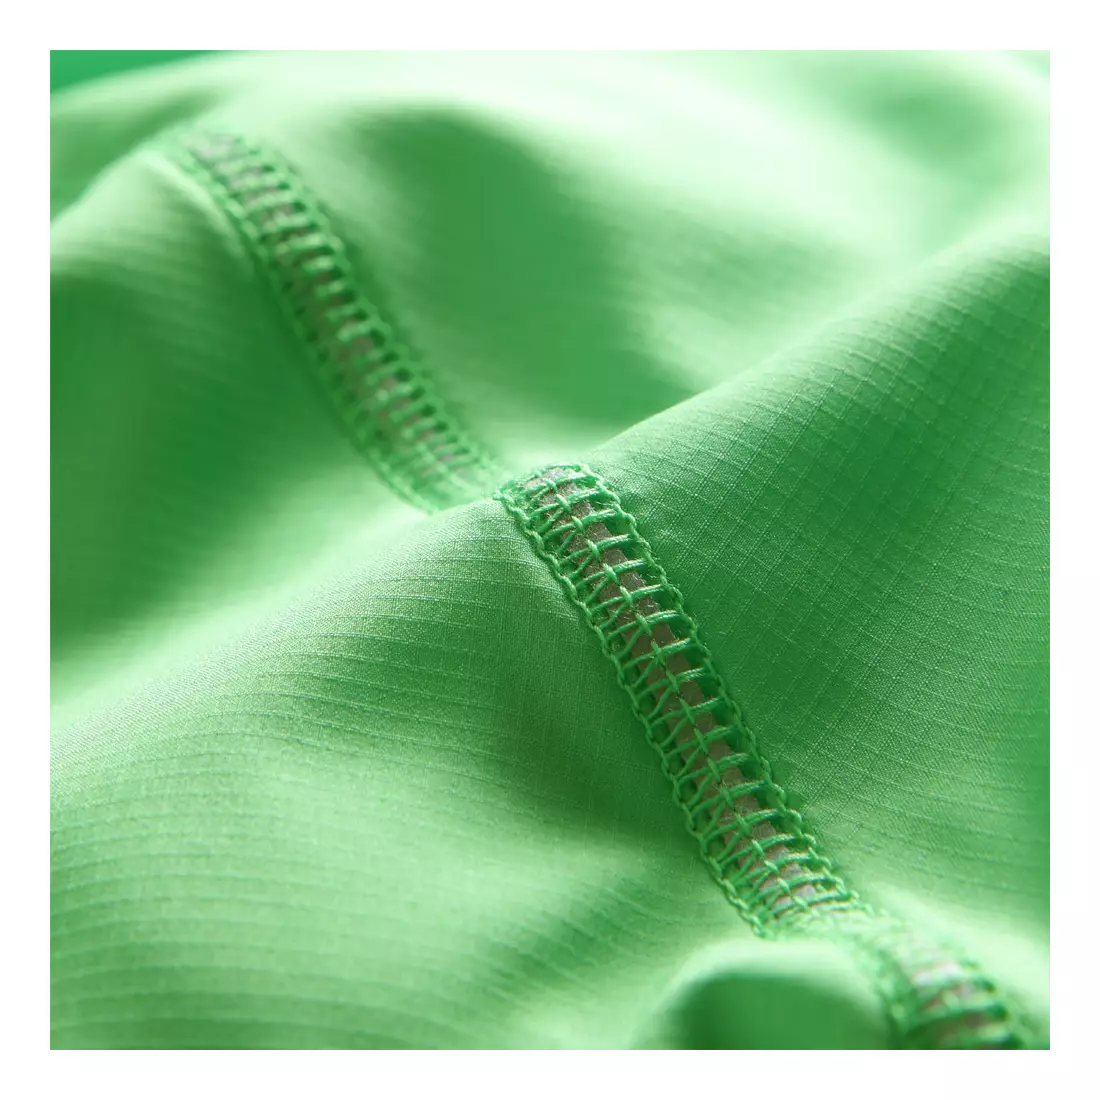 ASICS 110514-0498 CONVERTIBLE JACKET - men's running windbreaker, removable sleeves - color: Green